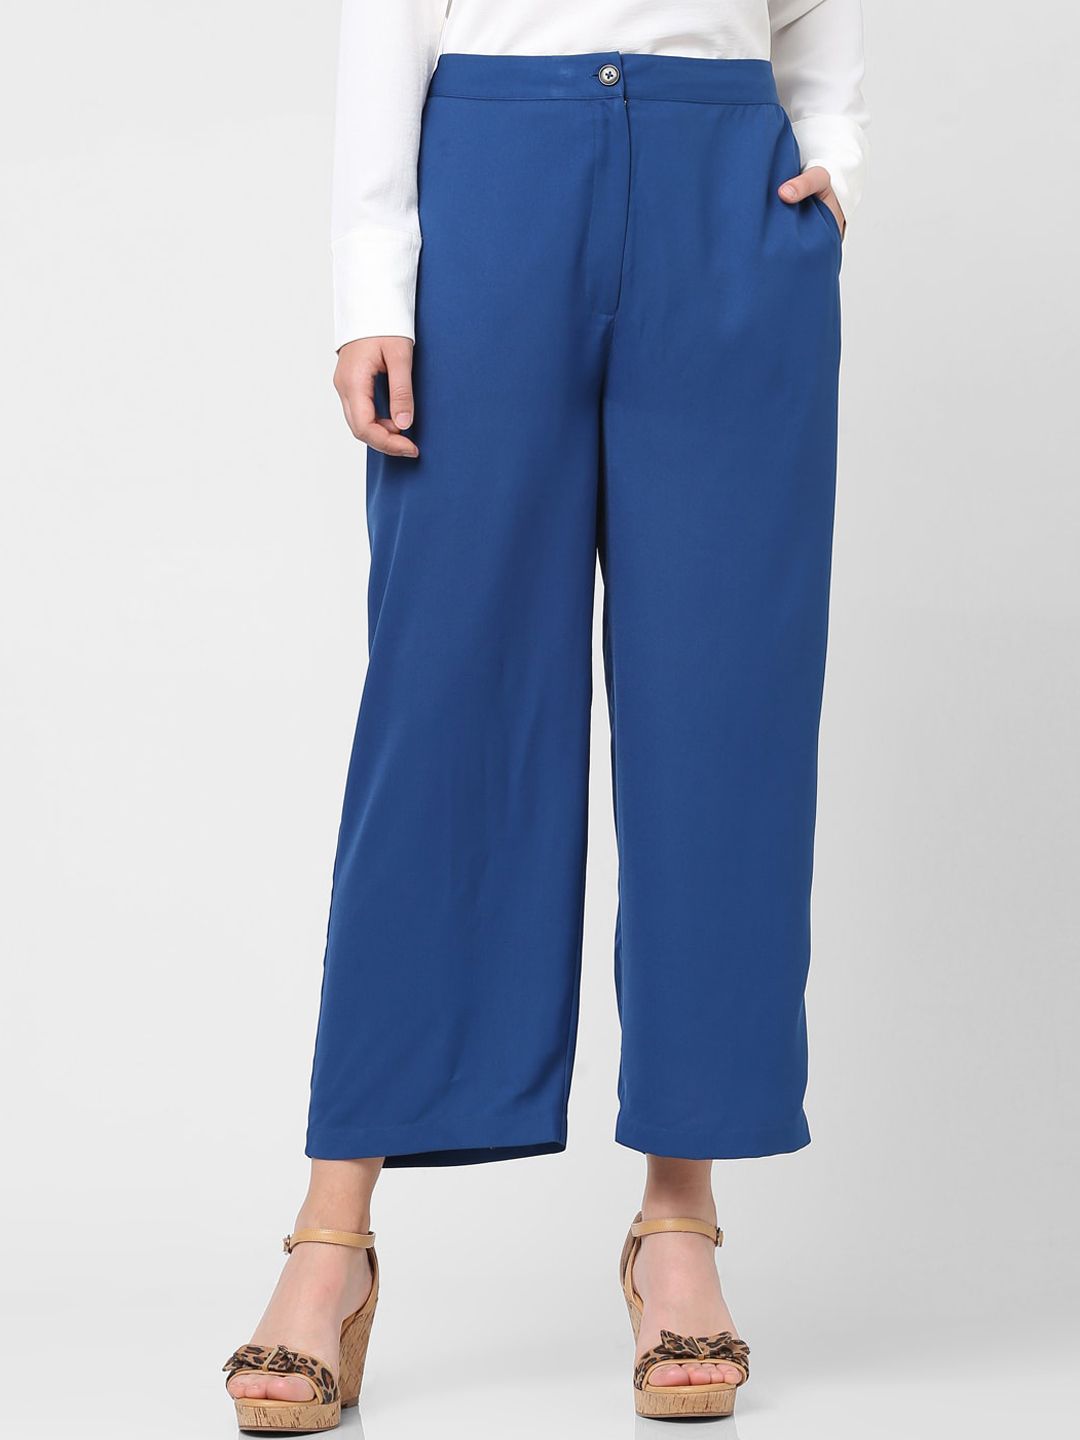 Vero Moda Women Blue Straight Fit Culottes Trousers Price in India